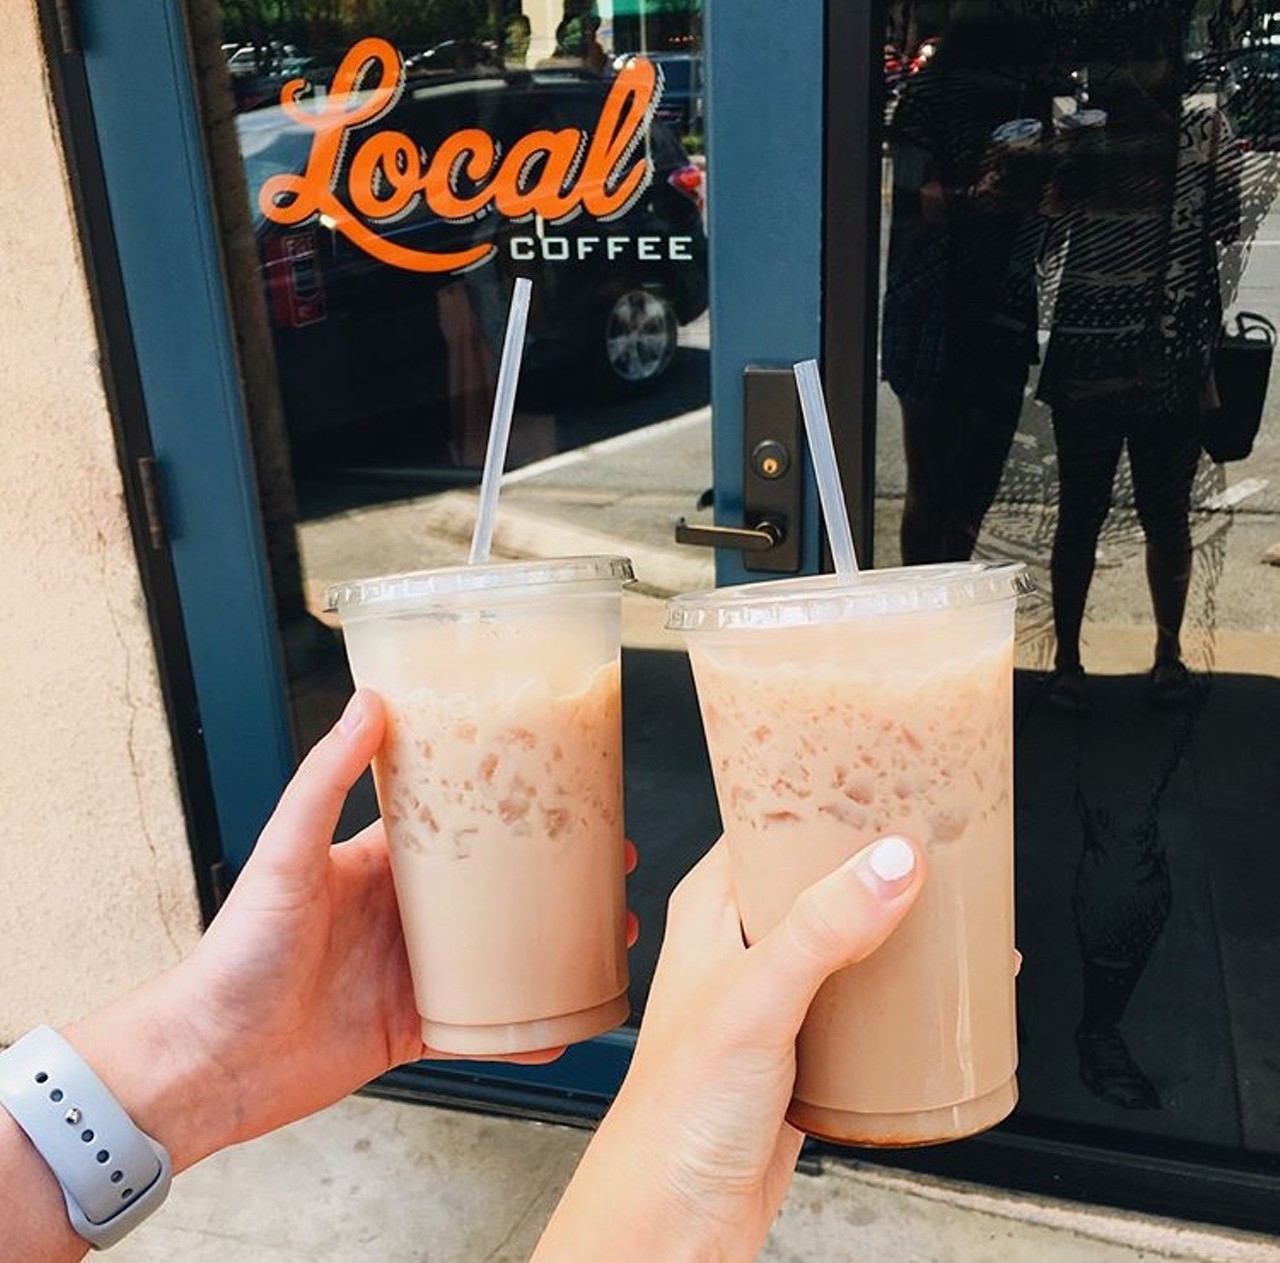 Best Coffee Shop
Local Coffee, multiple locations, meritcoffee.com
Photo via Instagram / emmstinson